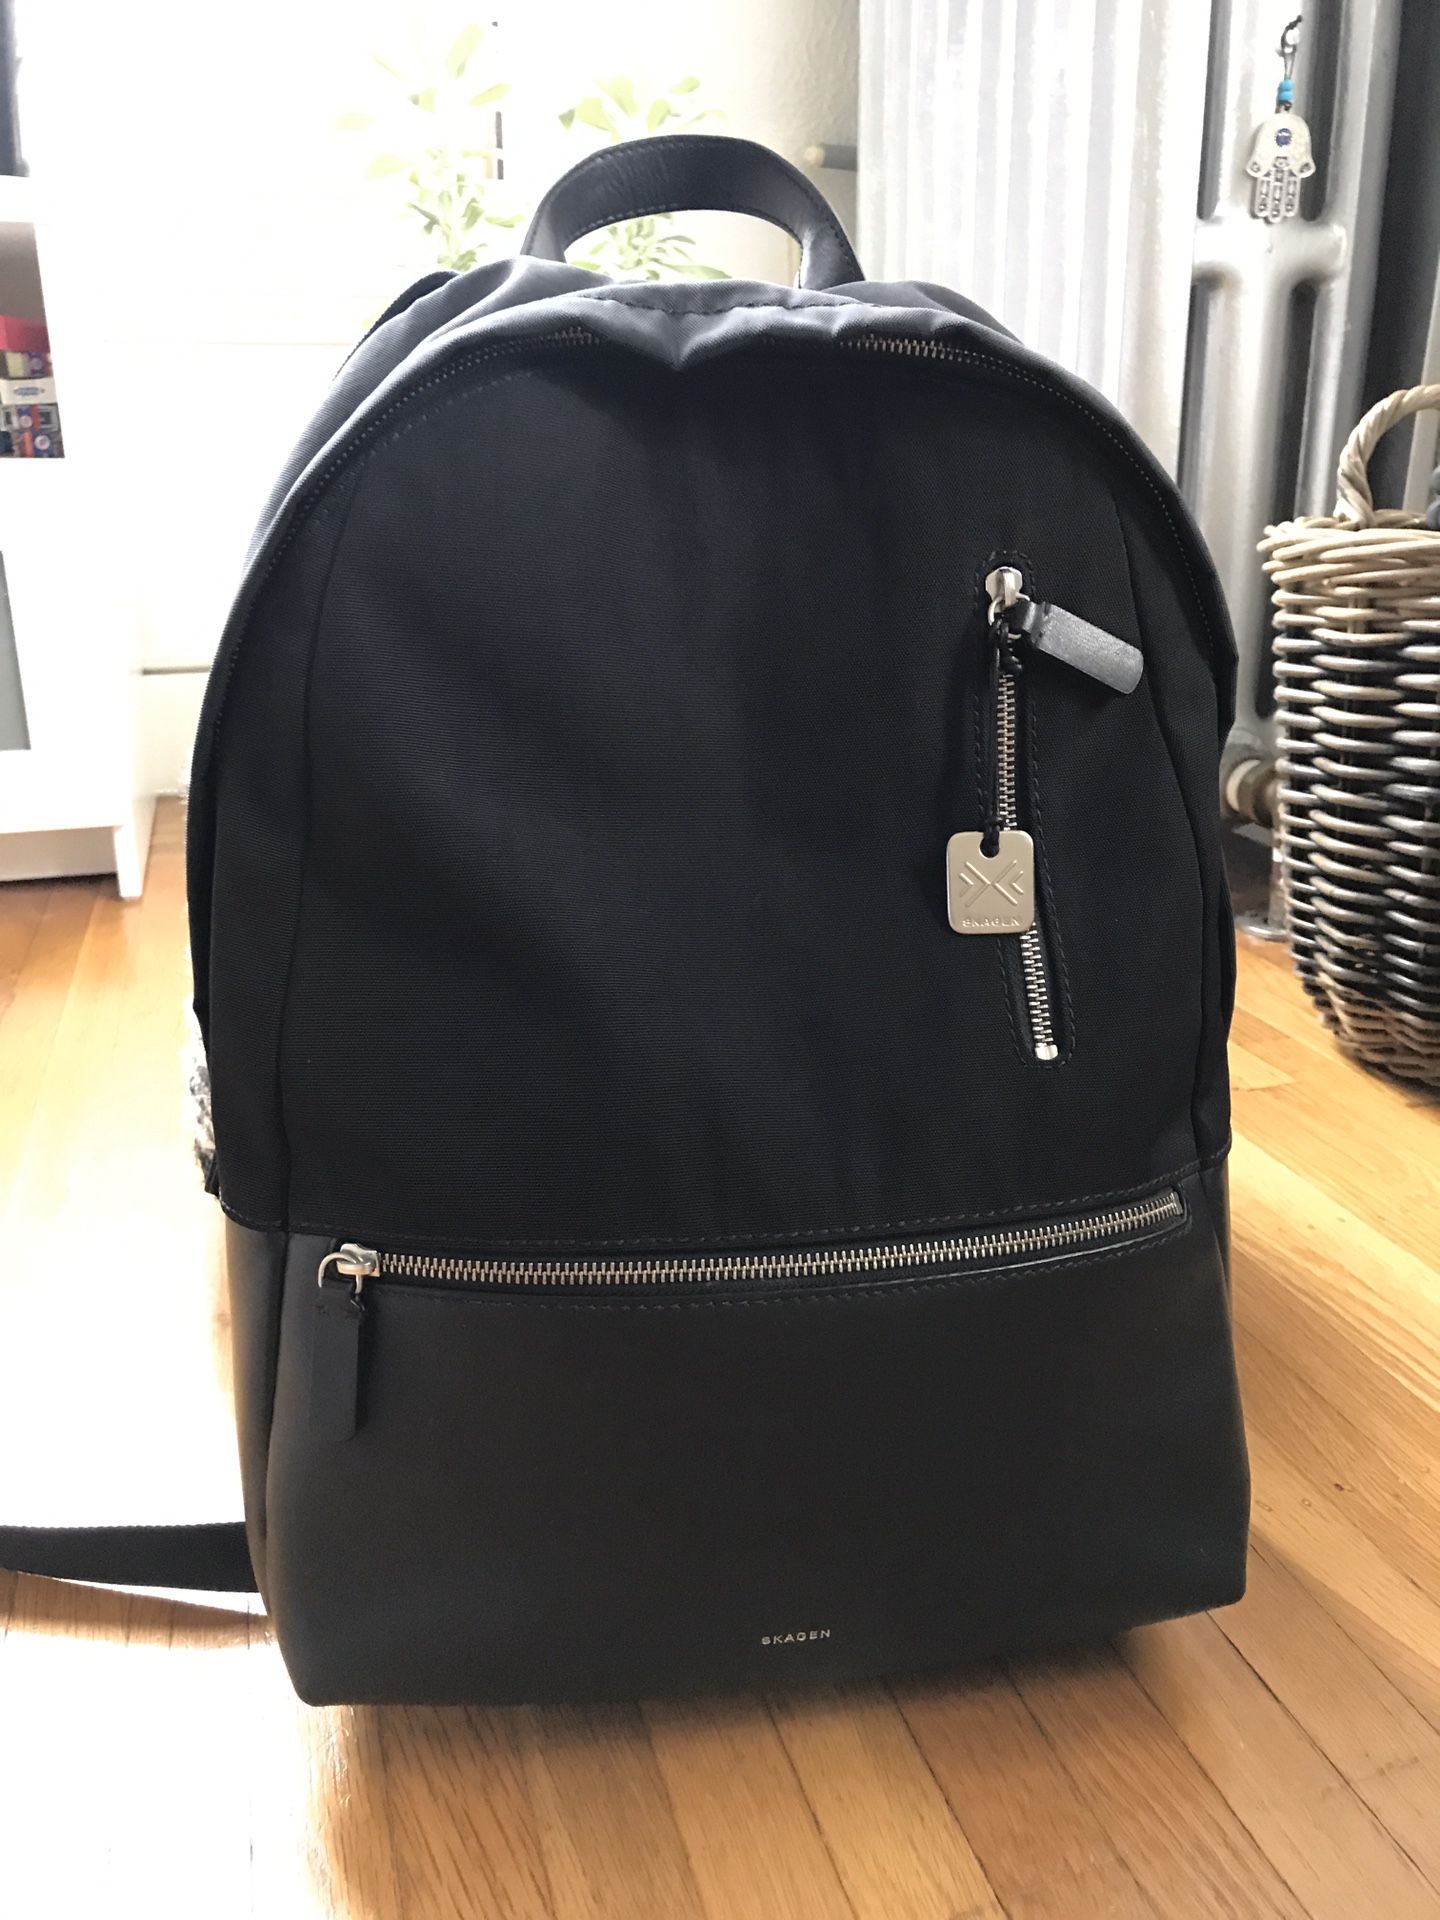 Skagen Men’s Luxury Backpack